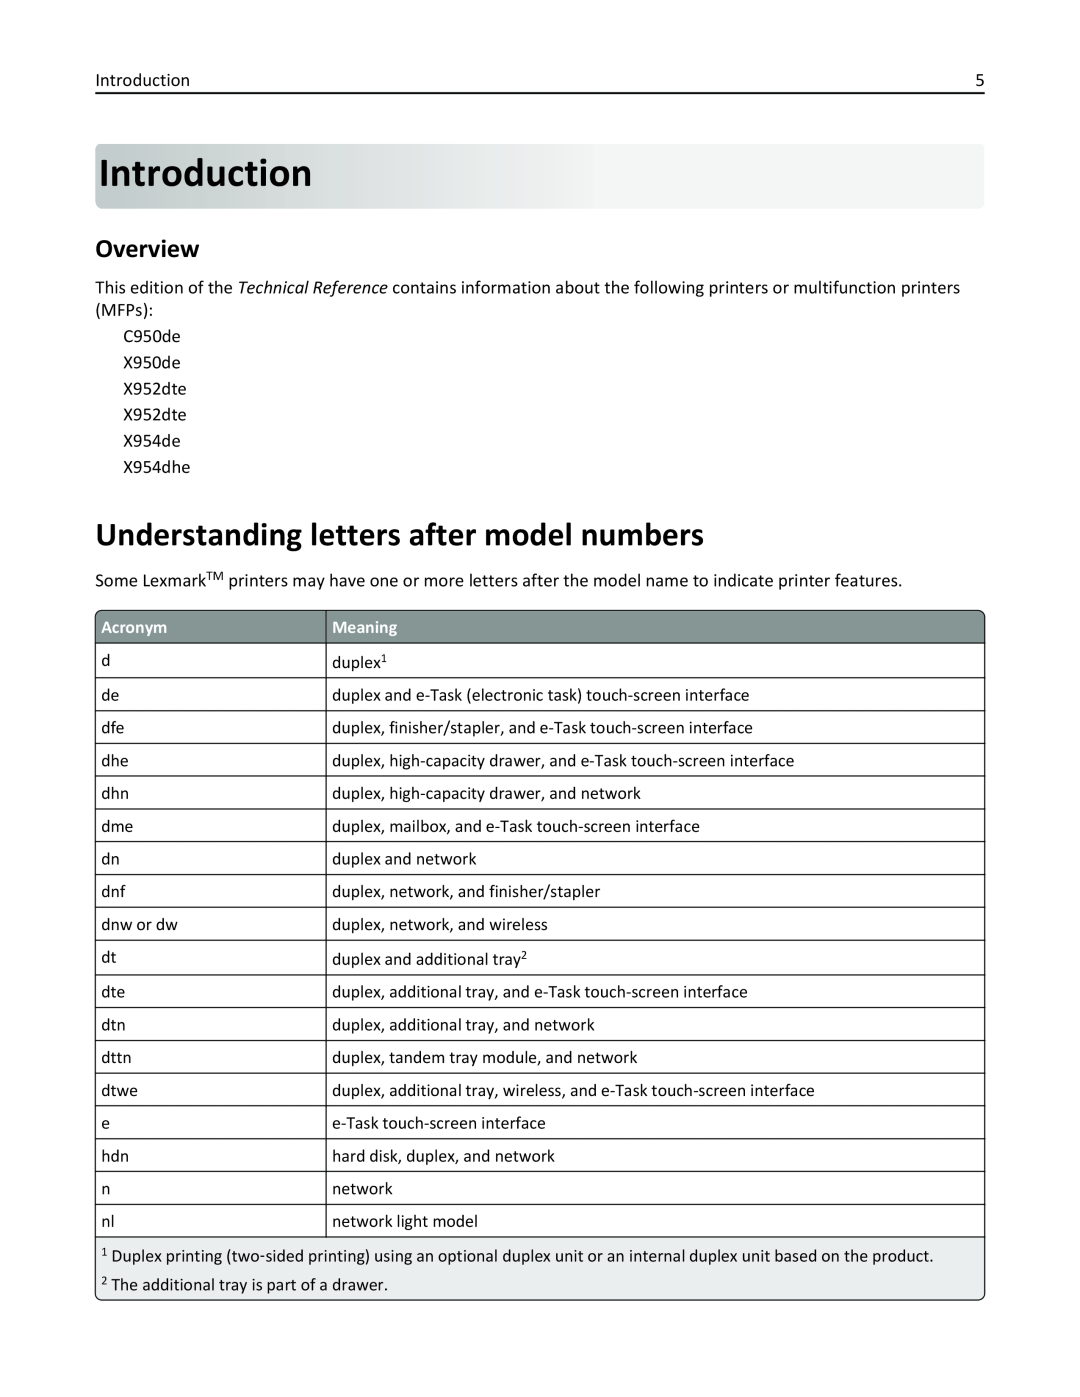 Lexmark 952DE, 950DE, 954DE, 954DHE, 952DTE manual Introduction, Understanding letters after model numbers, Overview 